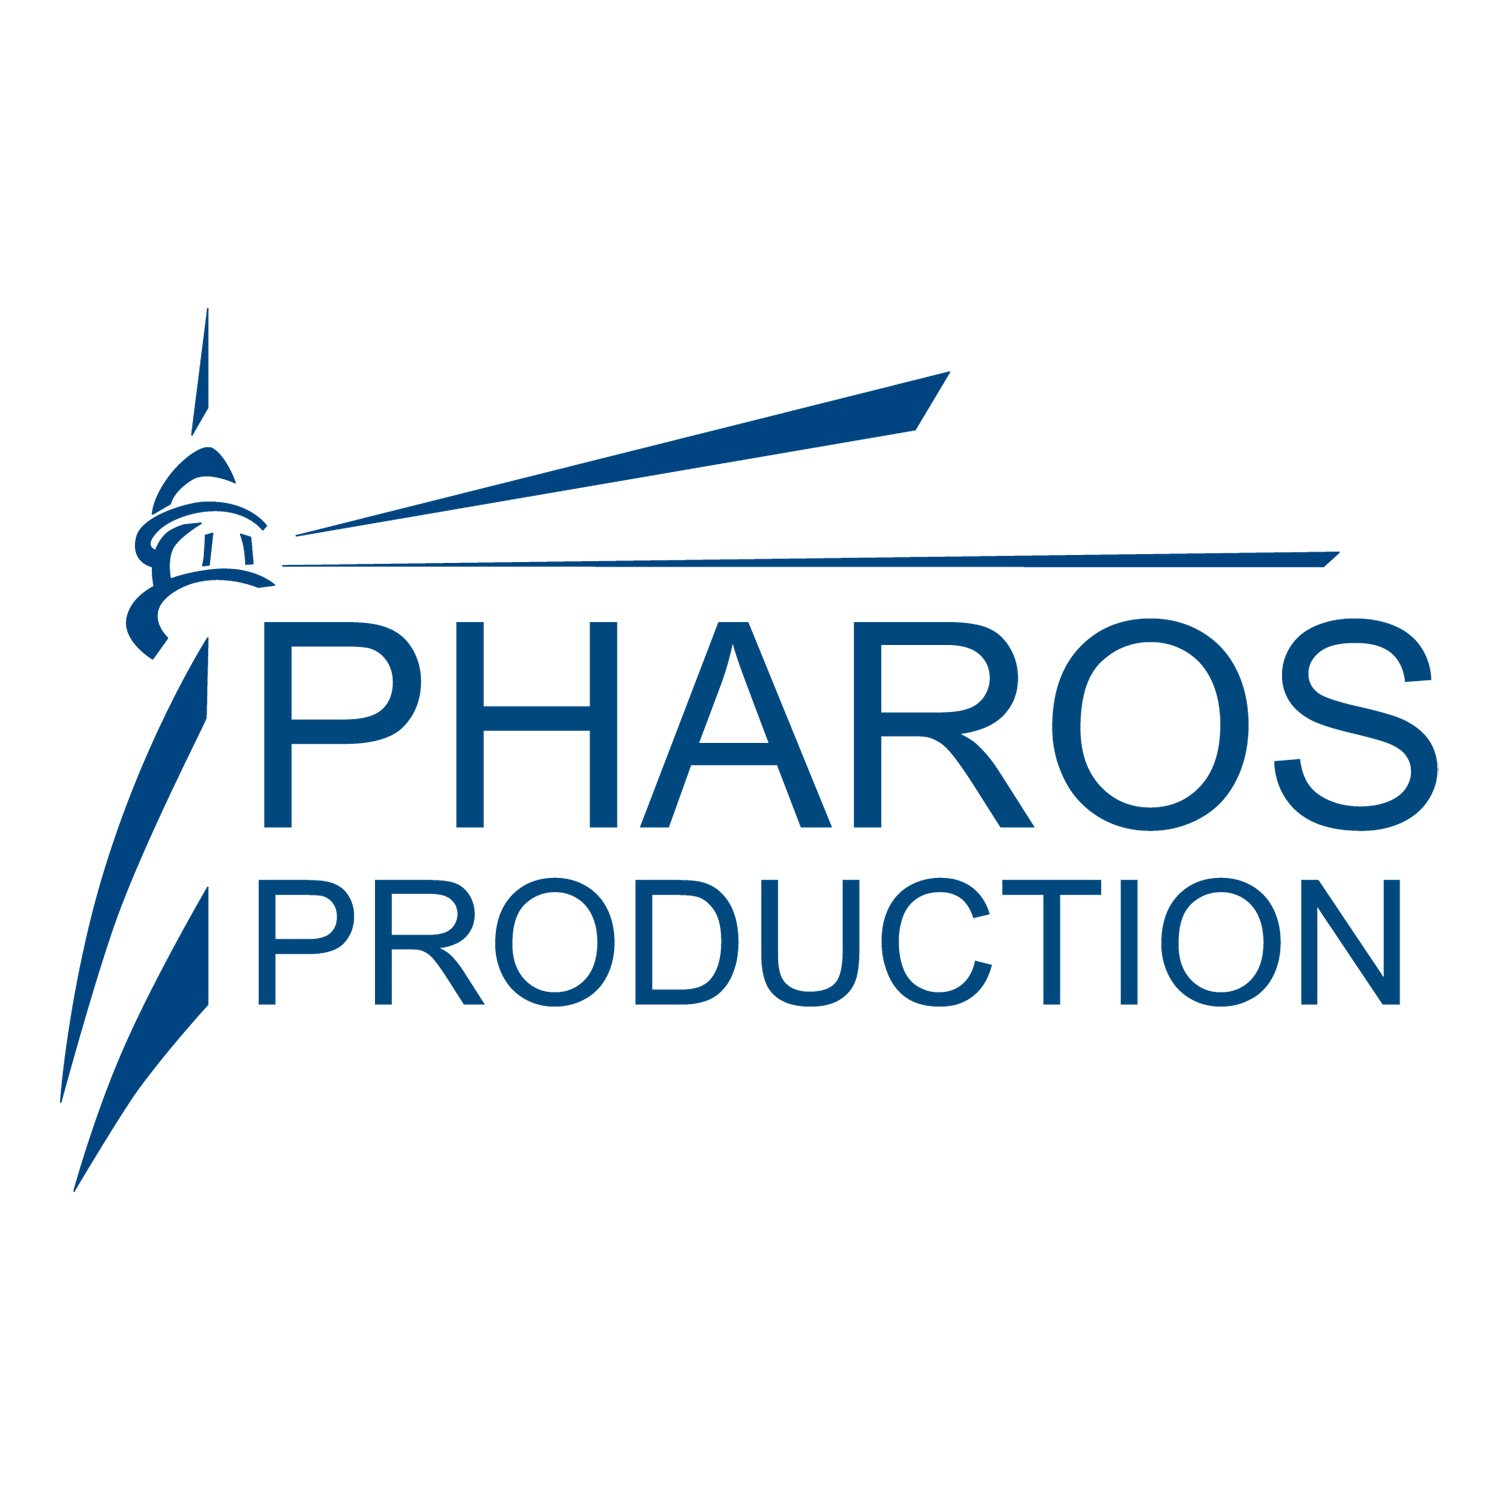 pharos-production-logo-2018